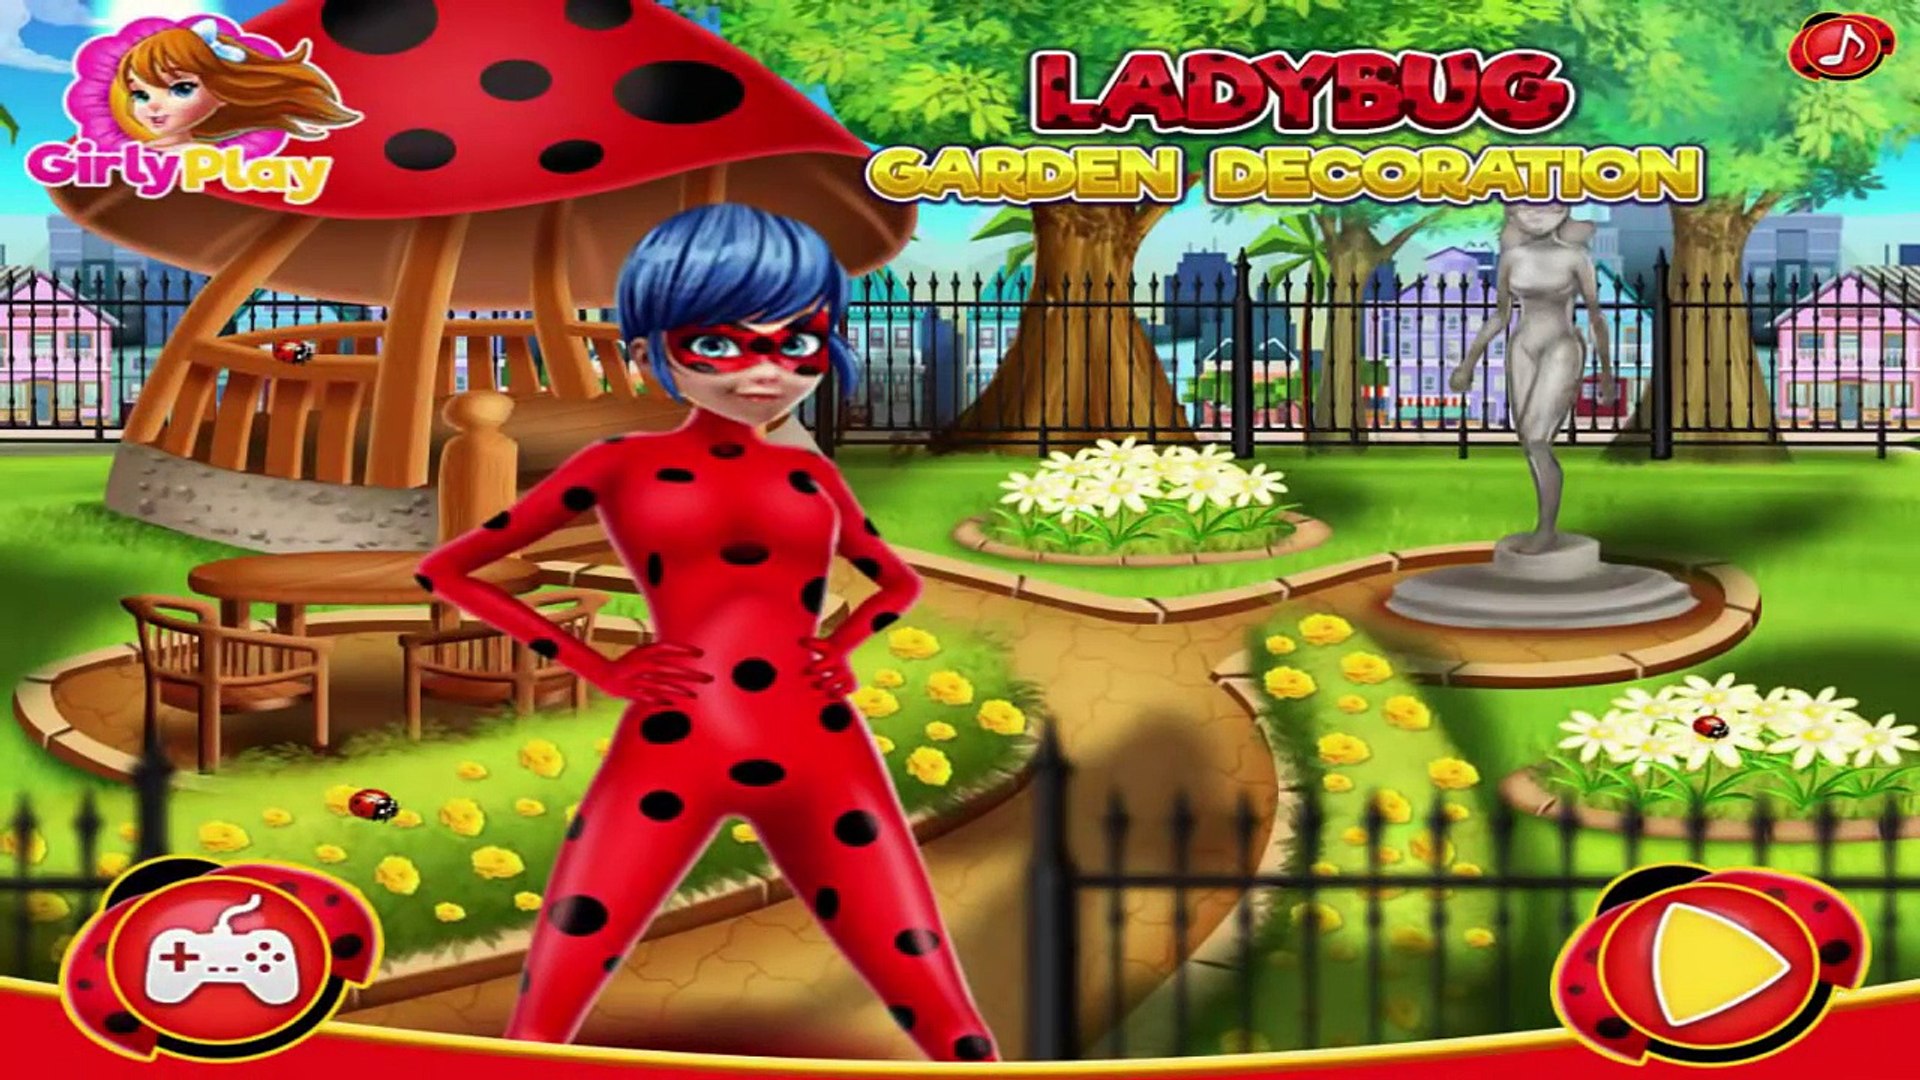 Ladybug Garden Decoration - Miraculous Ladybug and Cat Noir Games